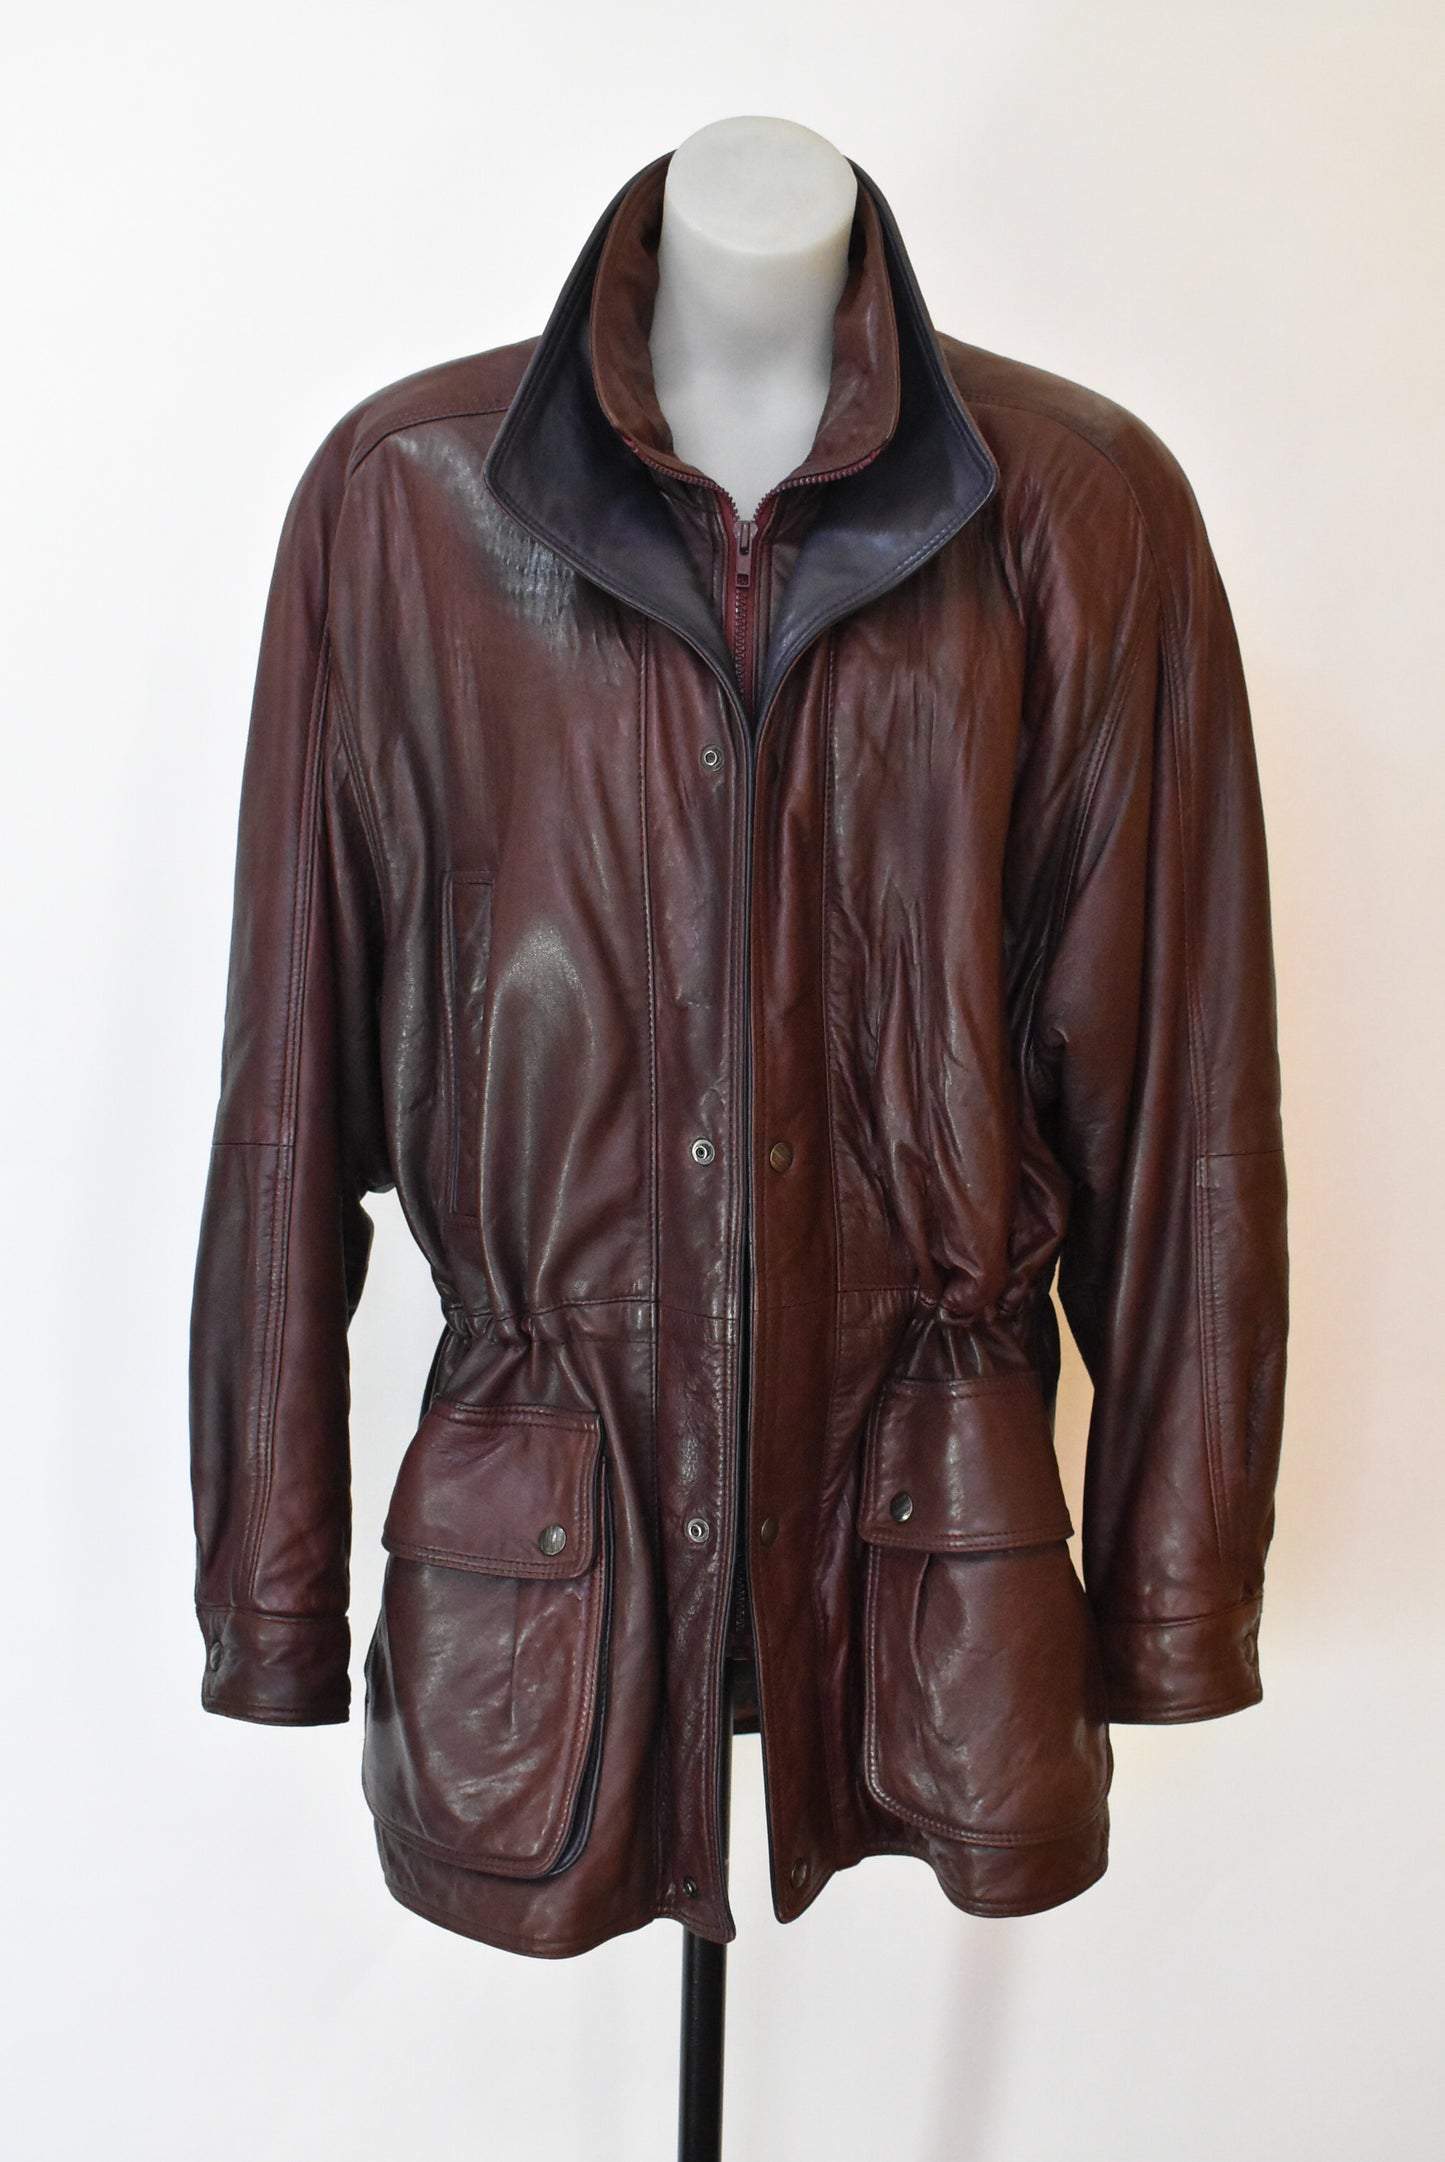 Colony Clothing Company retro plum leather jacket, L